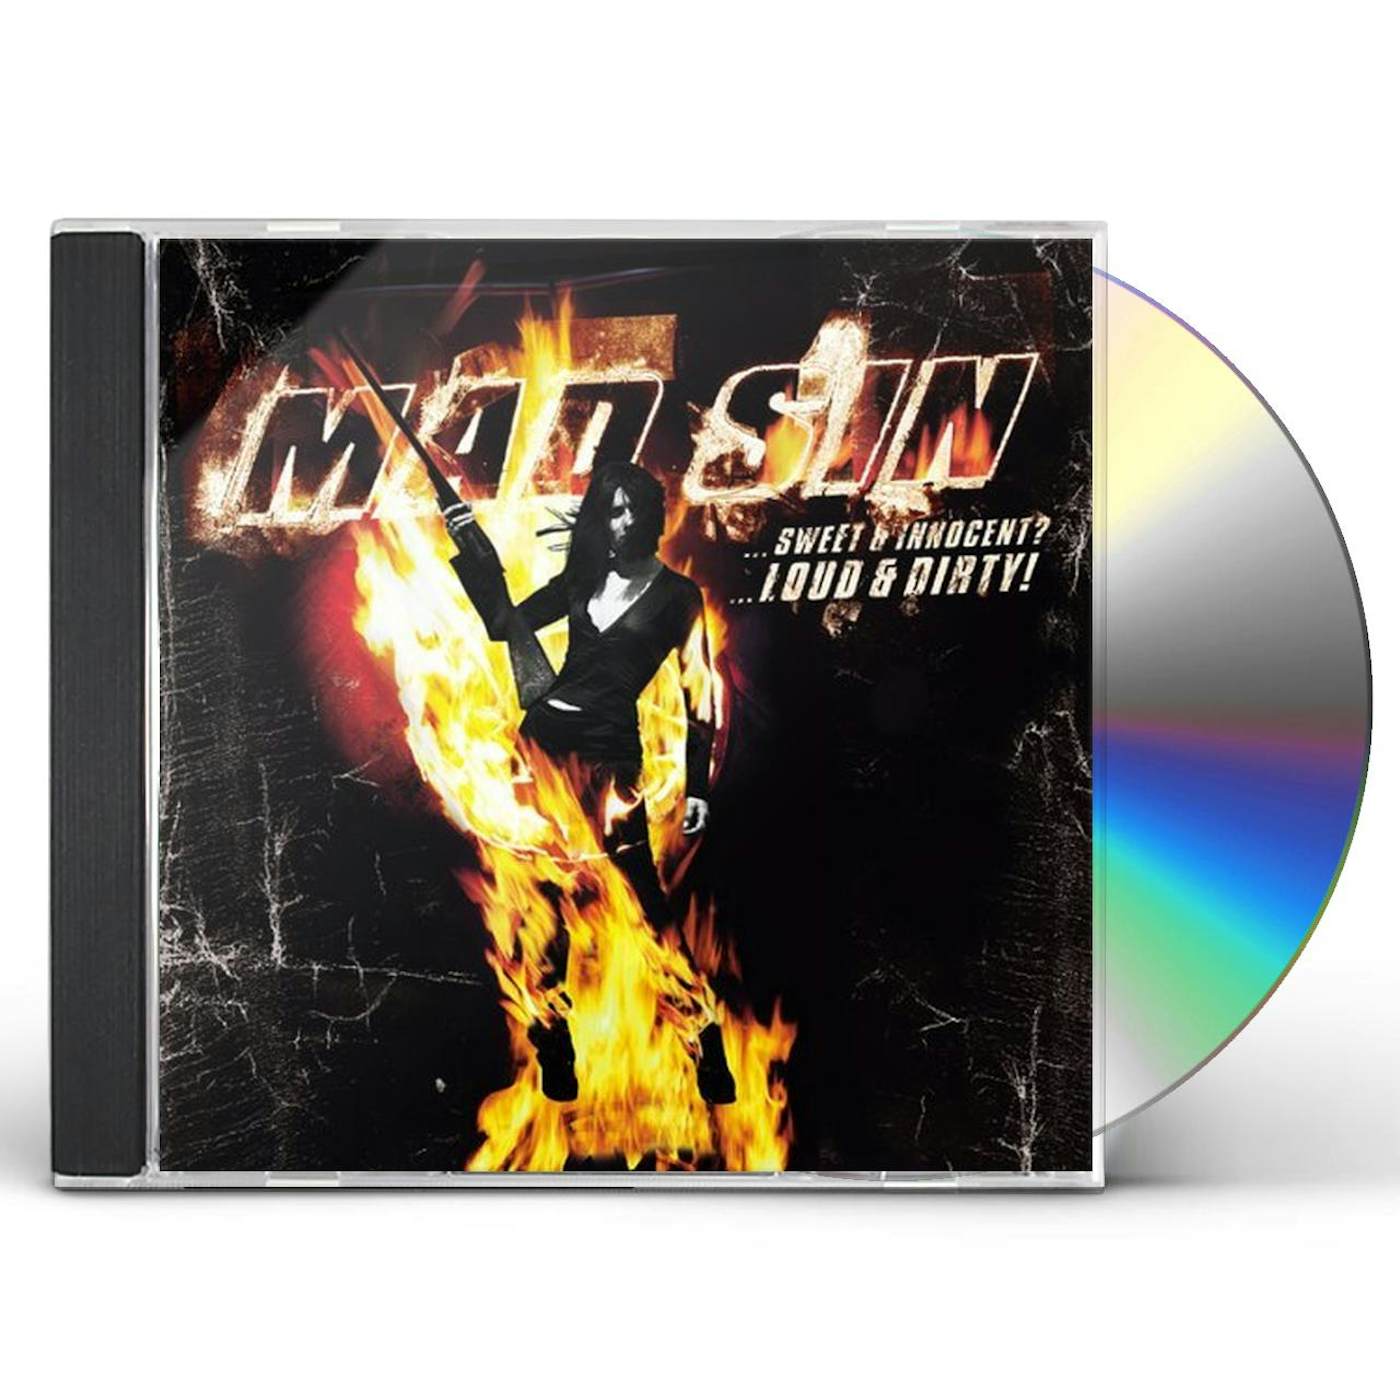 Mad Sin SWEET & INNOCENT LOUD & DIRTY CD